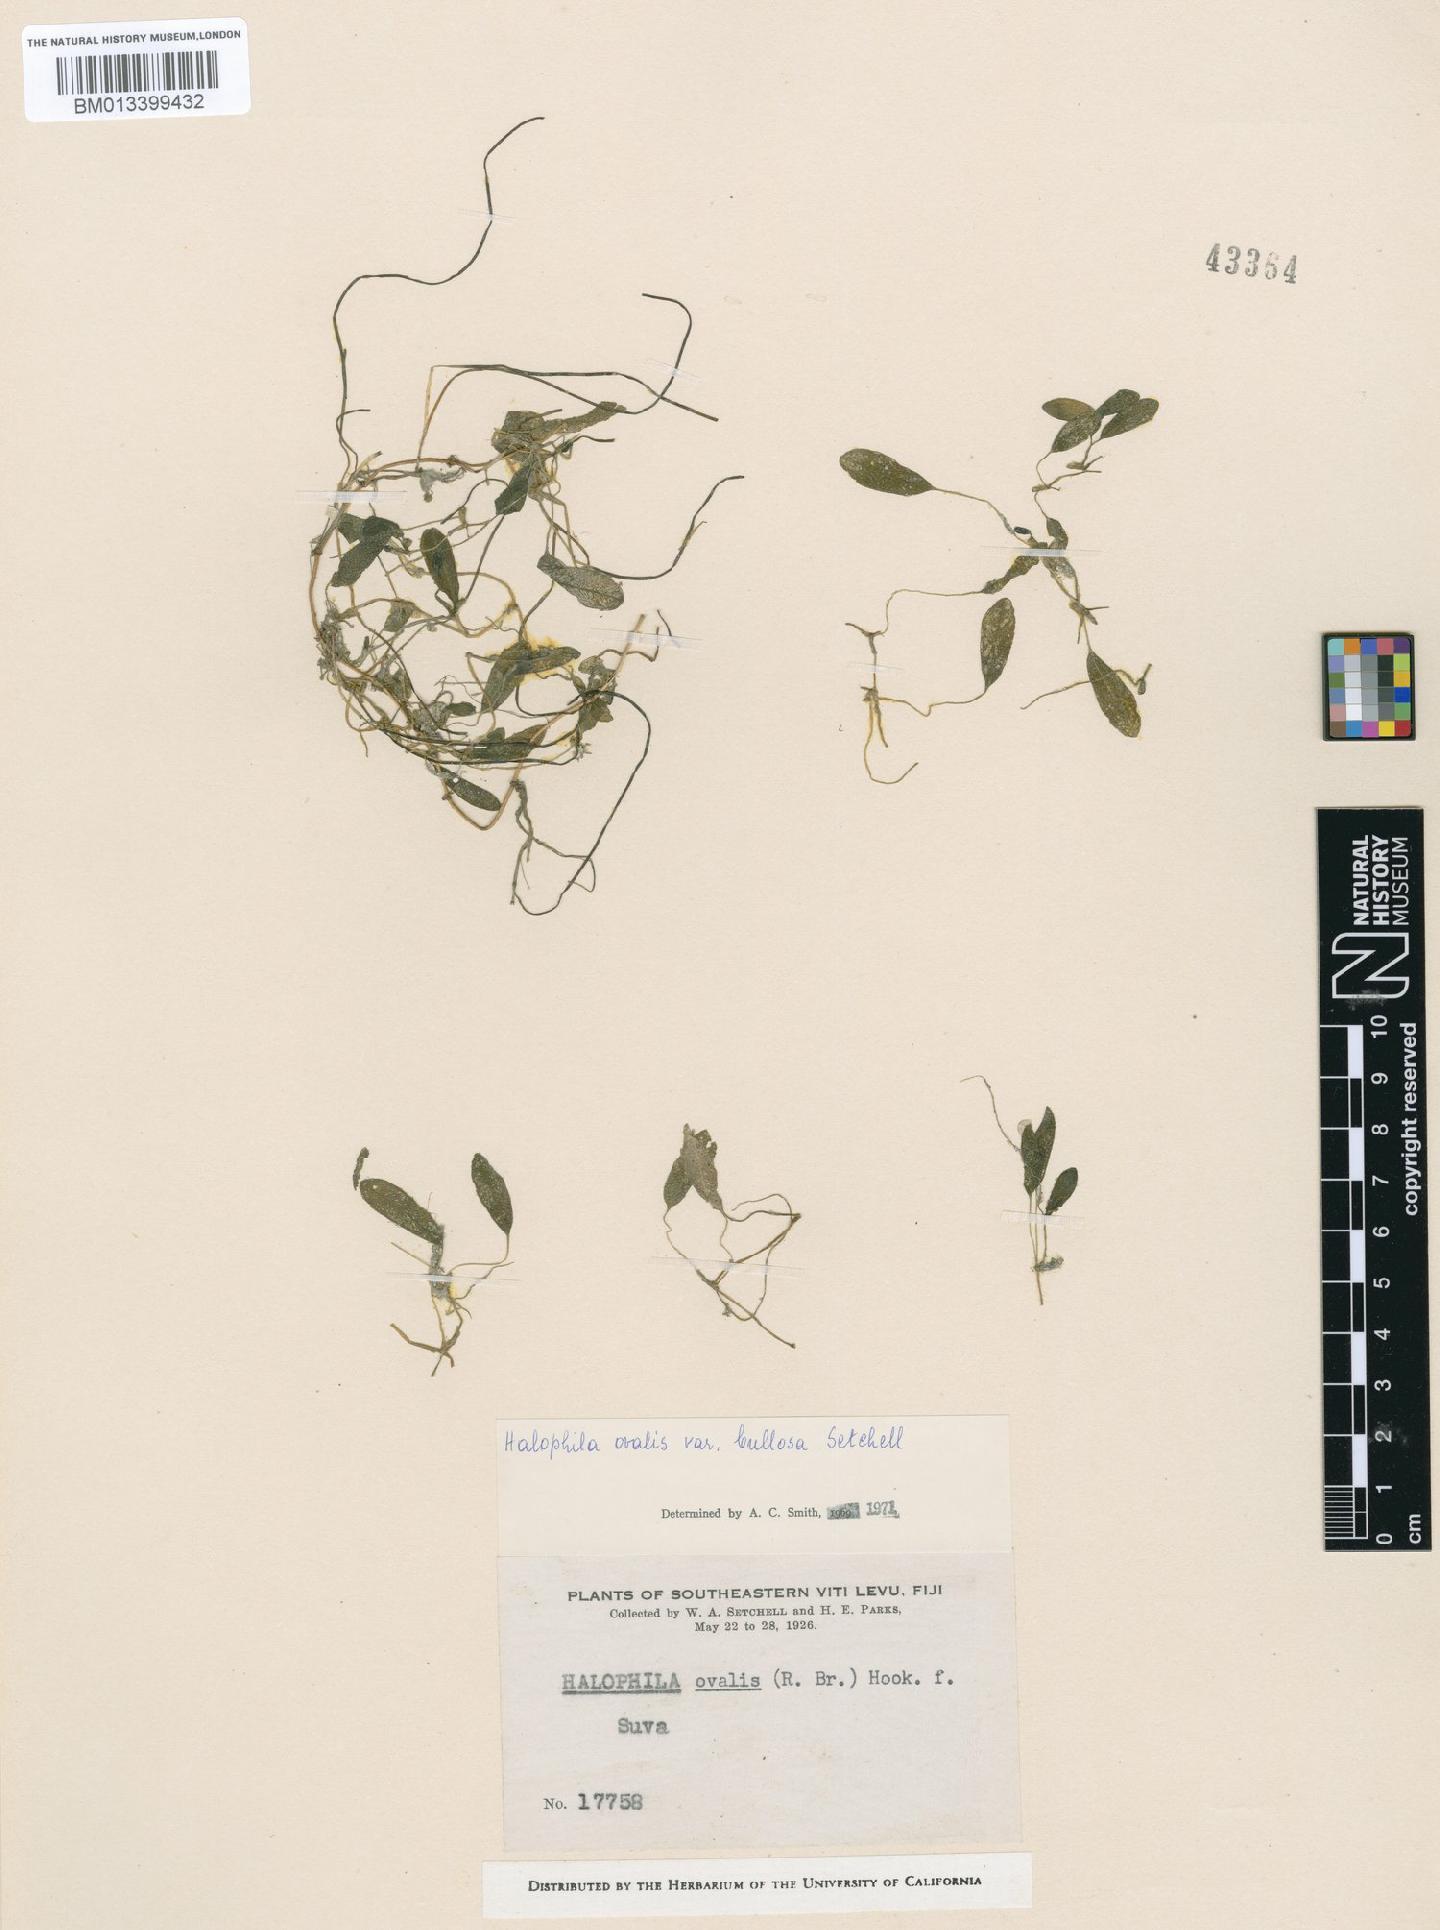 To NHMUK collection (Halophila ovalis (R.Br.) Hook.f.; NHMUK:ecatalogue:9142842)